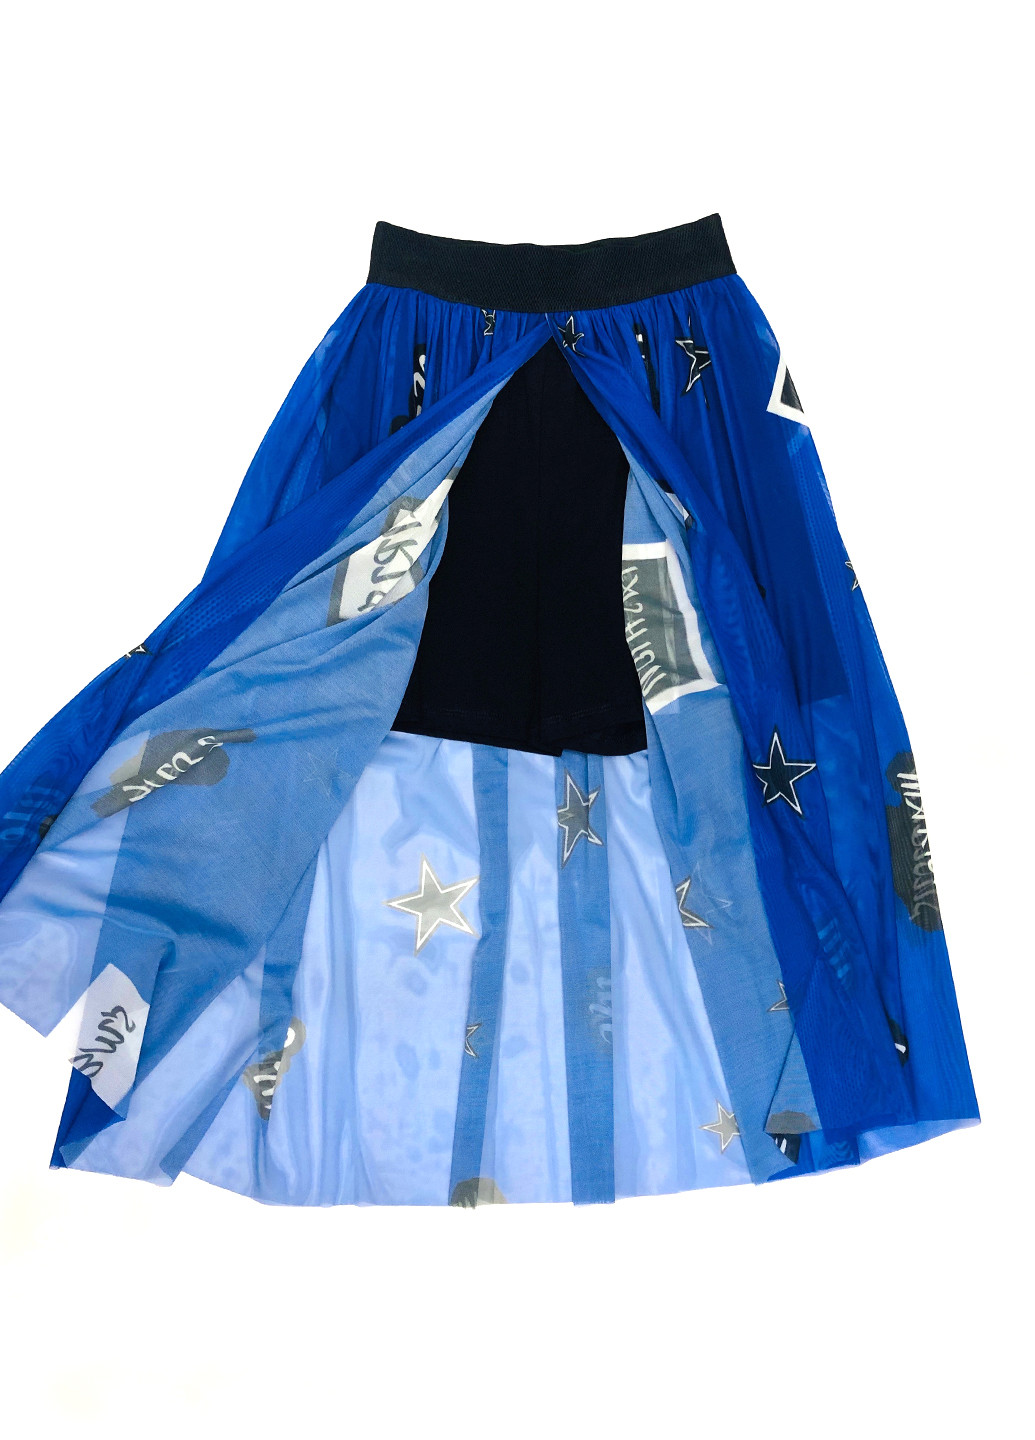 Синий демисезонный костюм (бомбер, майка, юбка) юбочный, тройка Marions